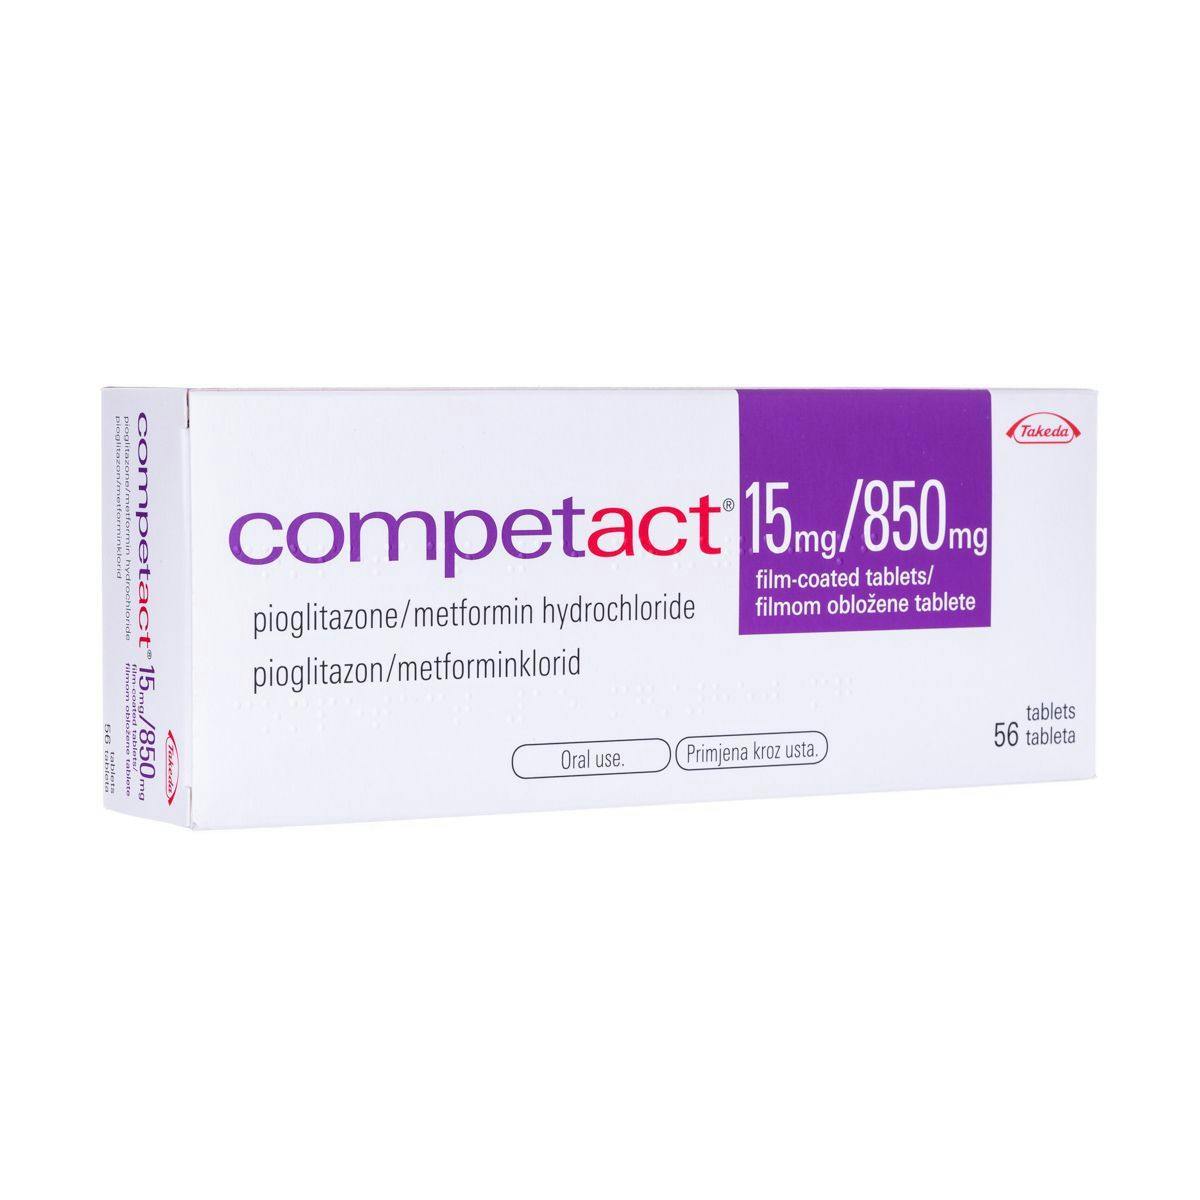 Competact (Pioglitazon / Metforminhydrochlorid)